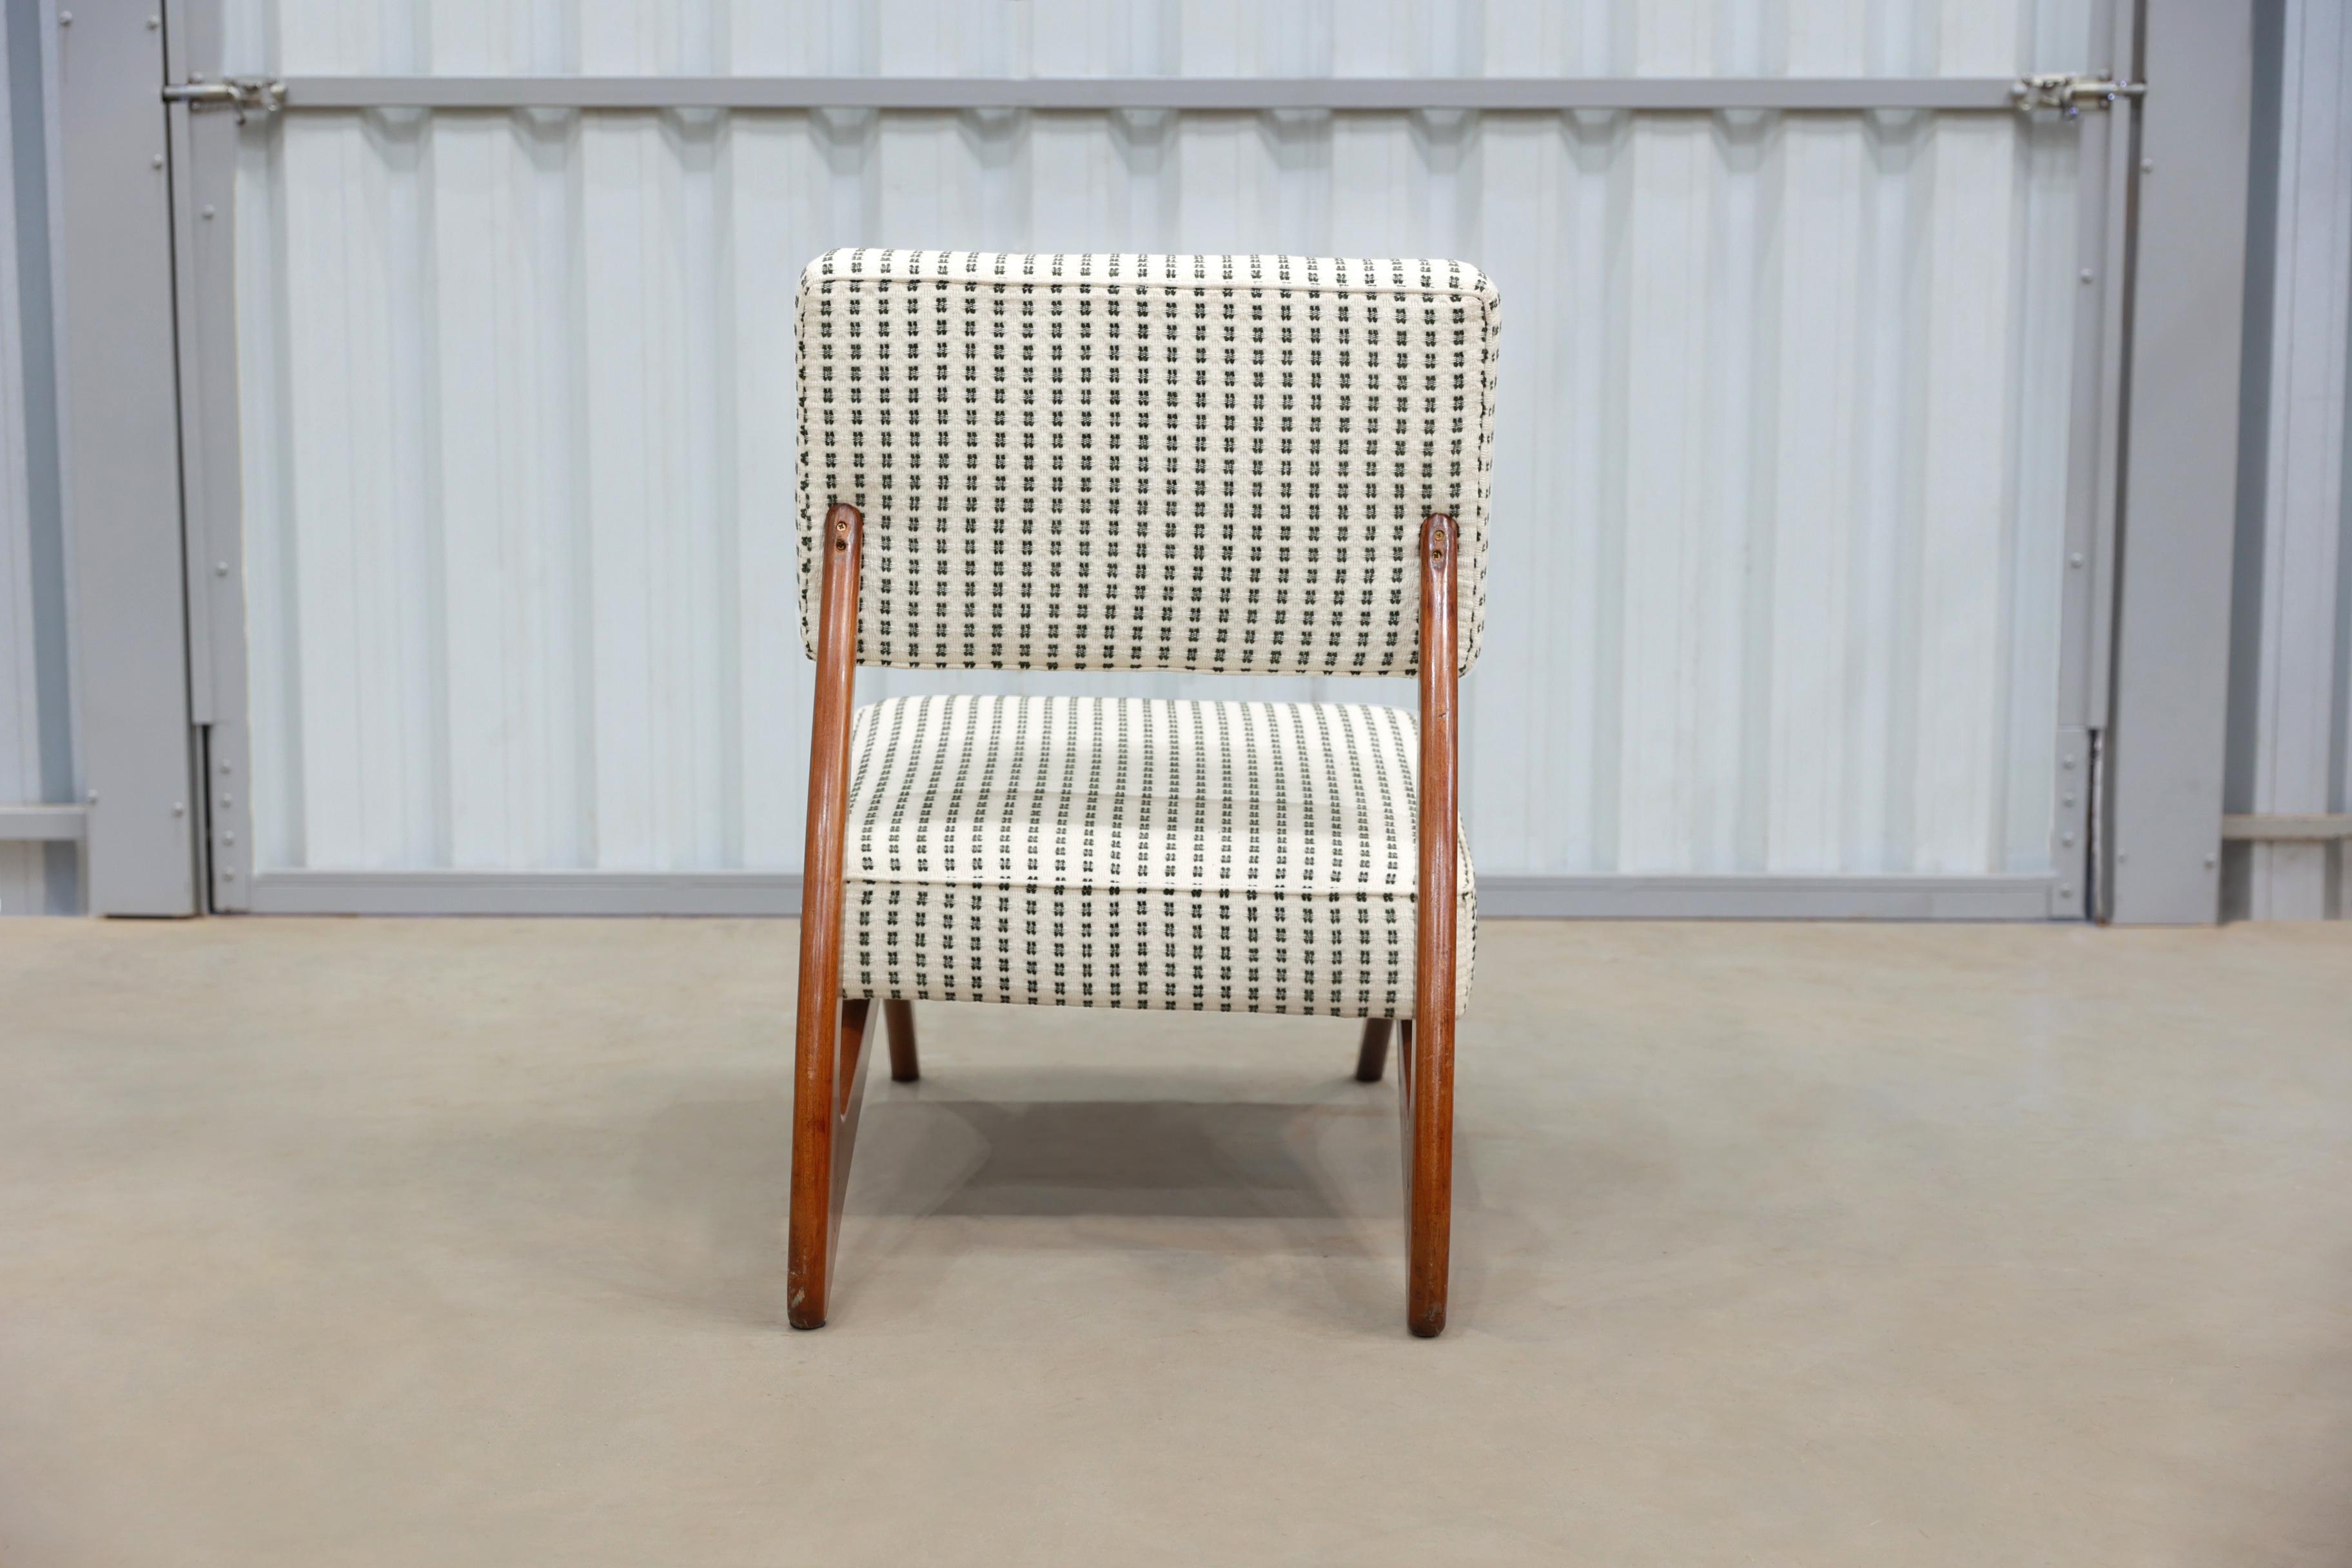 Fabric Brazilian Modern Lounge Chair in hardwood by Moveis Cimo, Brazil, 1950s